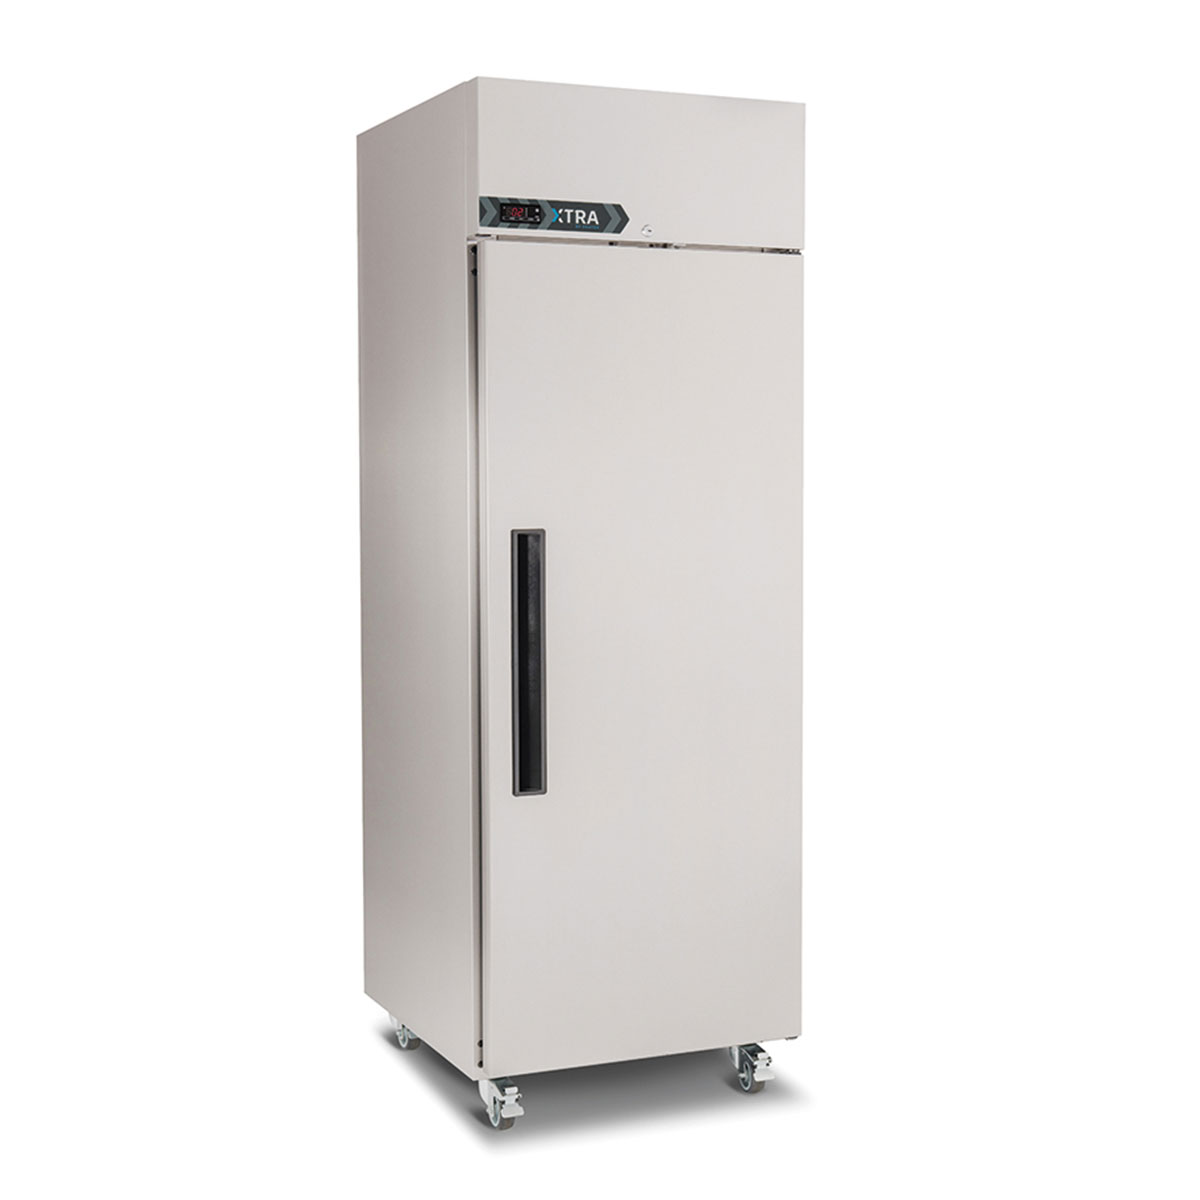 Foster xtra Single Door 1 - Refrigeration Equipment Suppliers in Cornwall